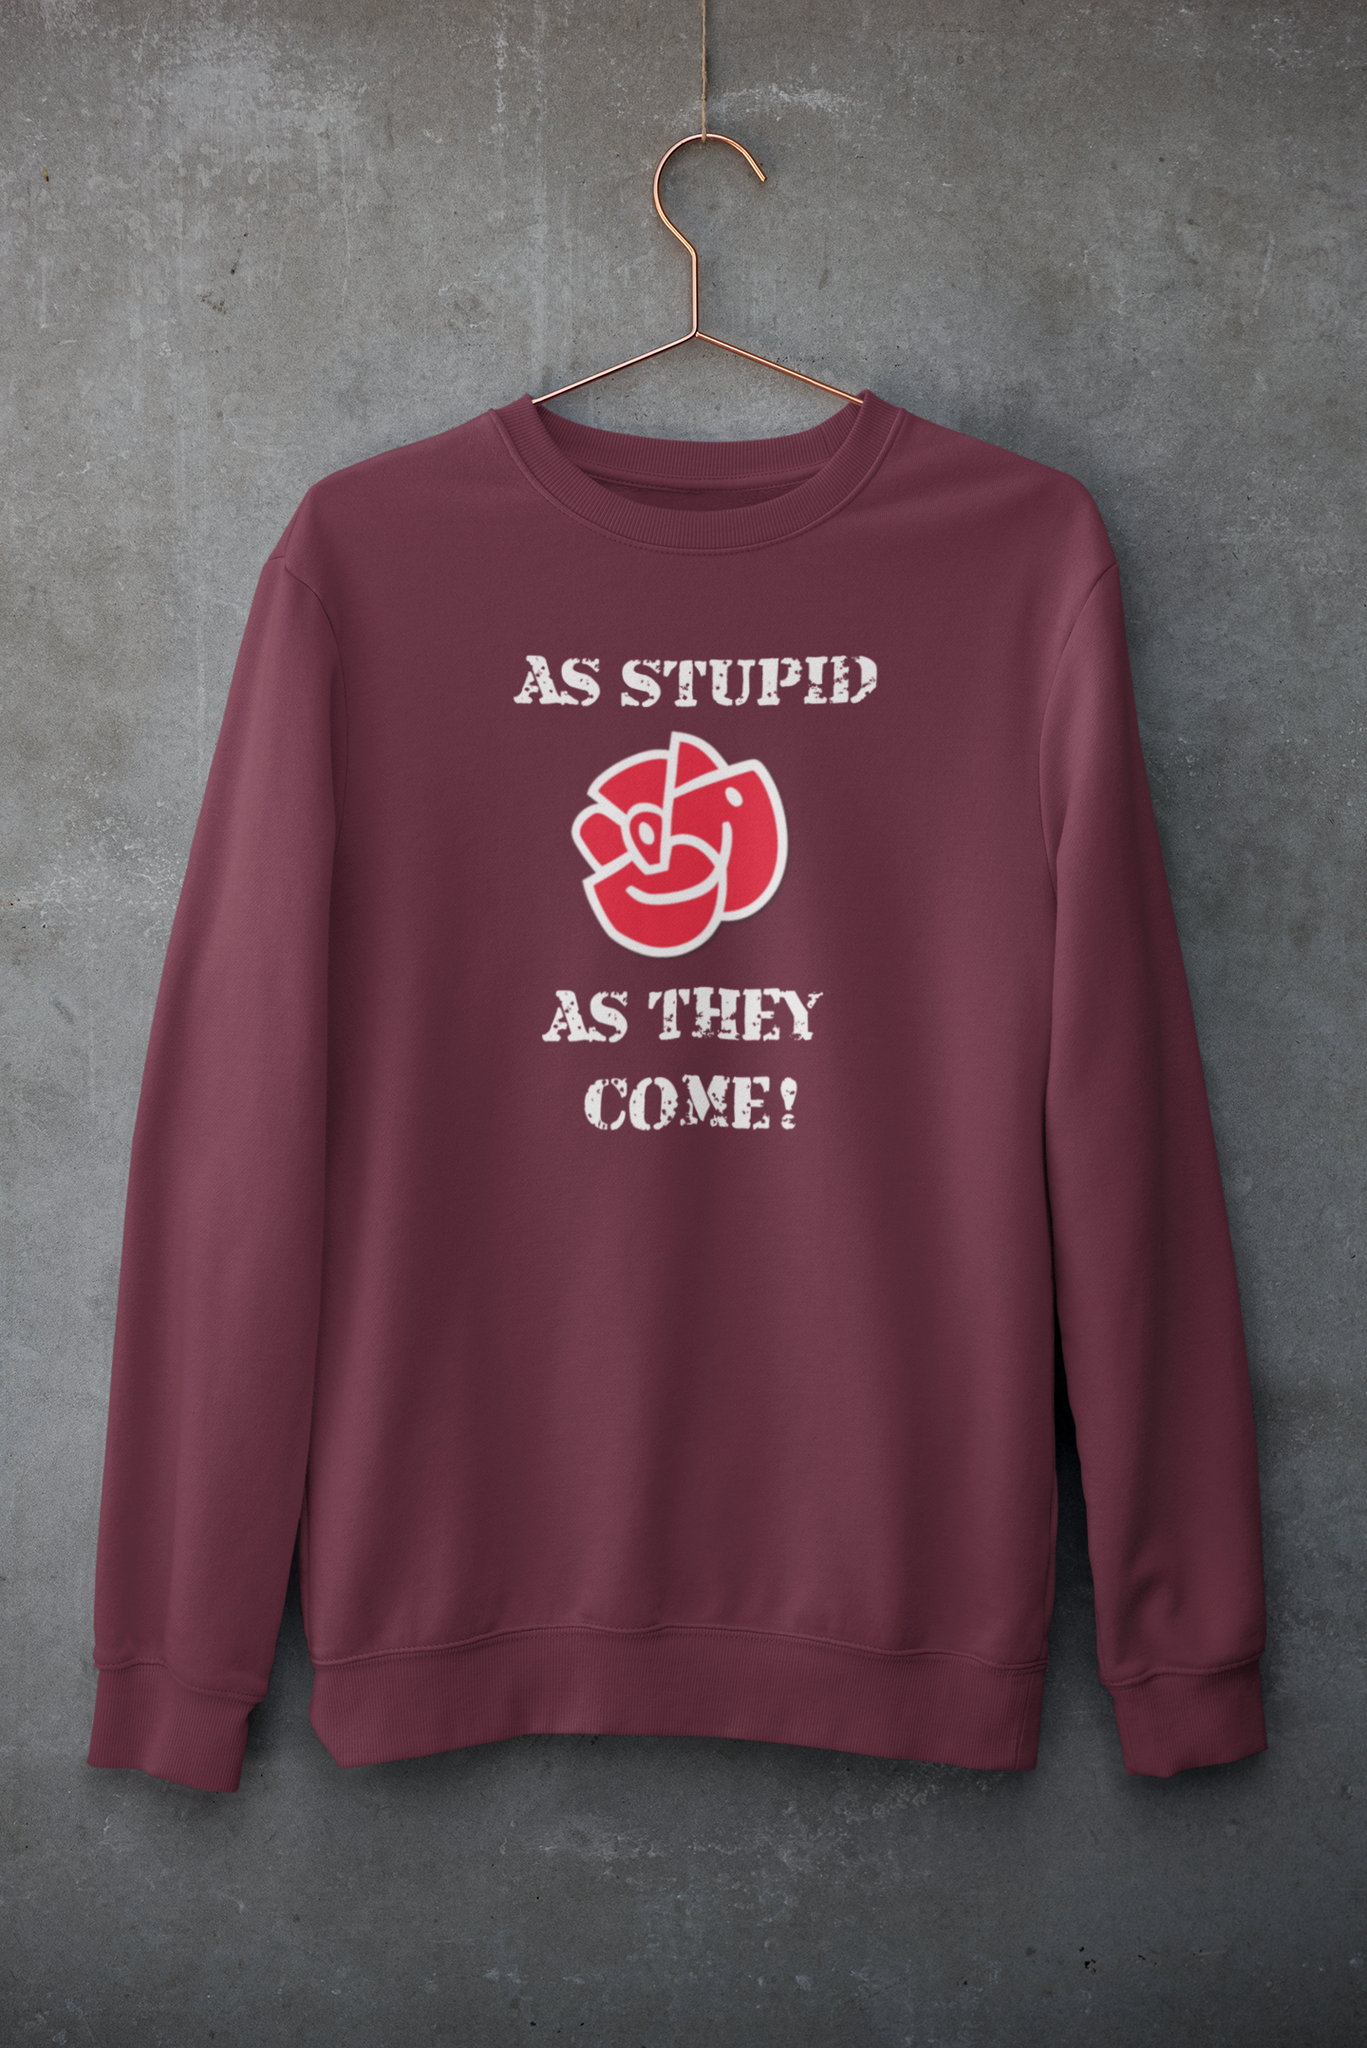 Socialdemokraterna As Stupid As They Come! Sweatshirt Unisex